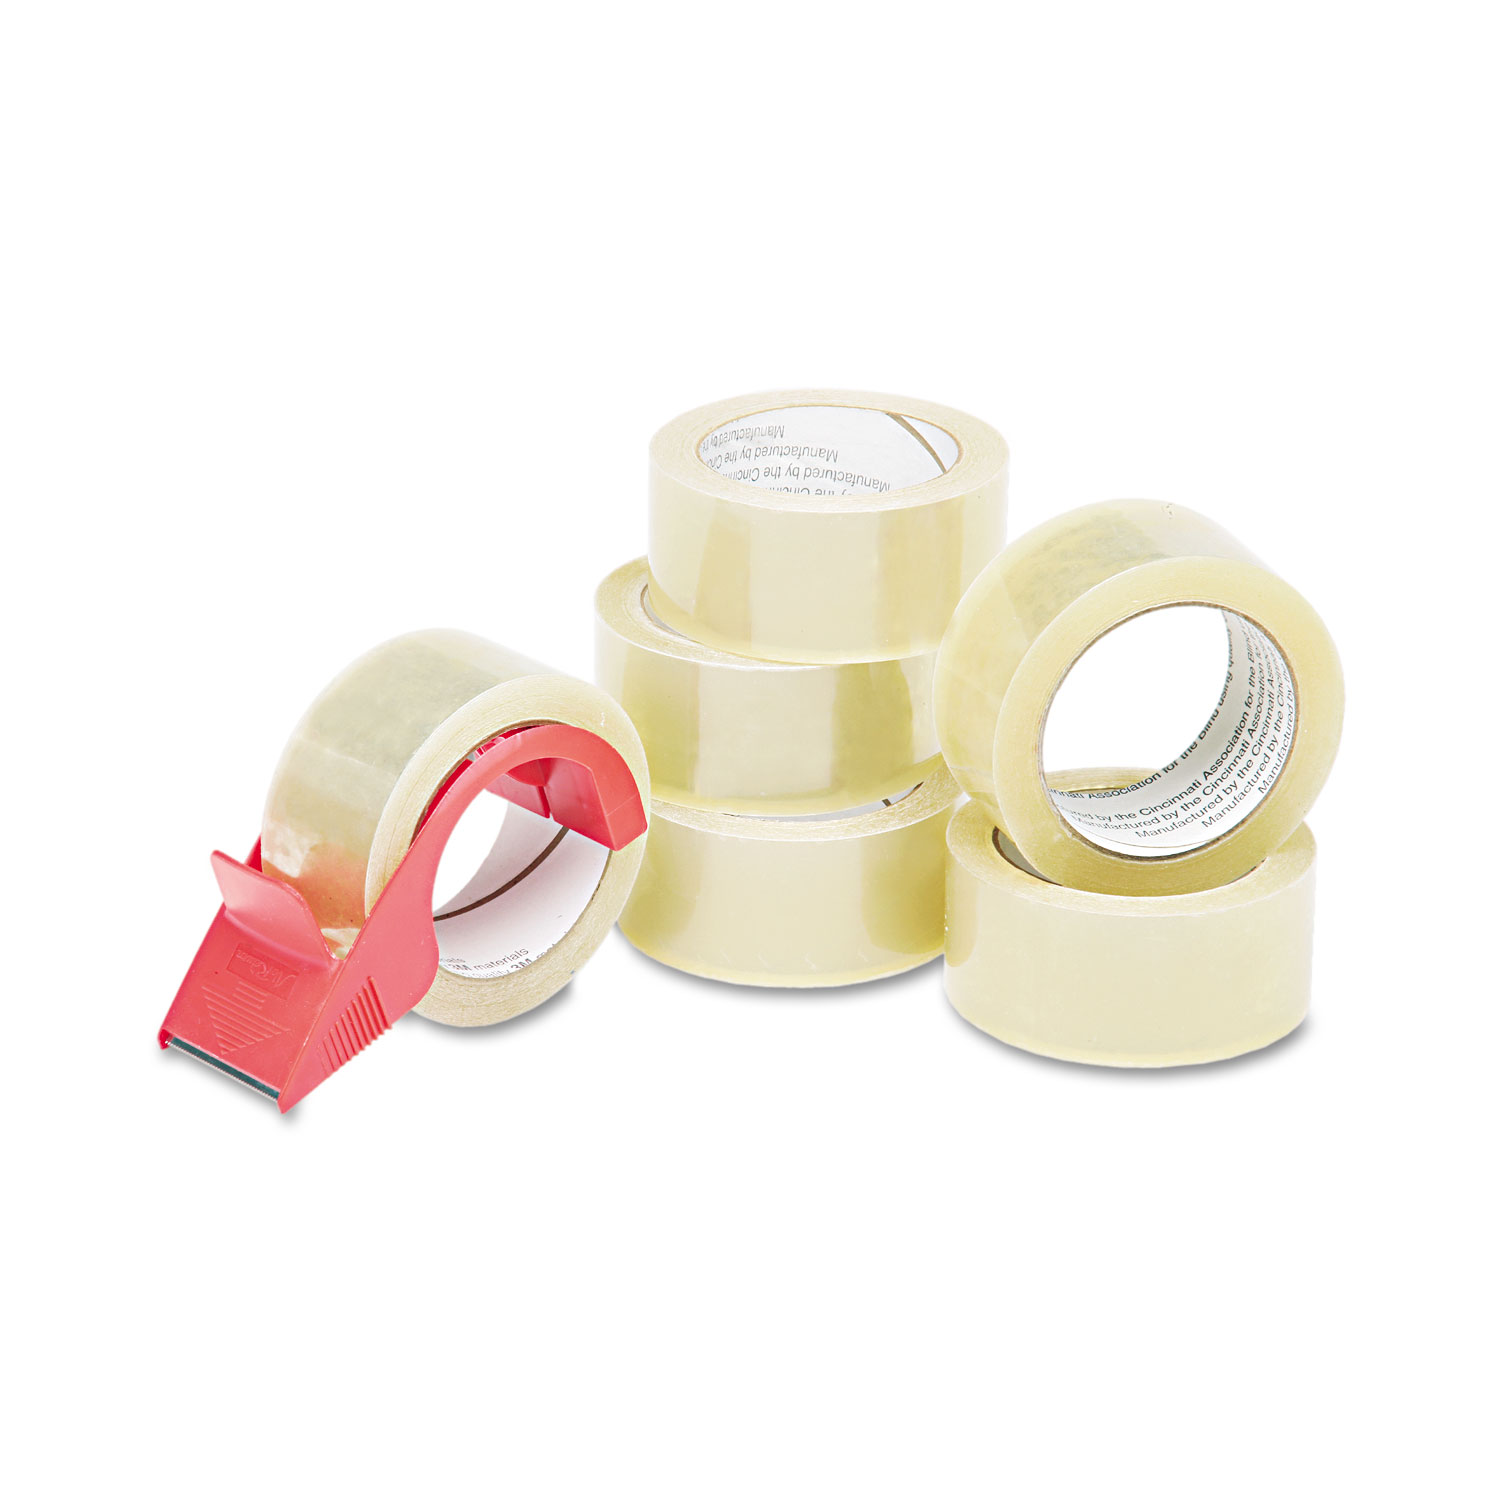 2x55 yd Acrylic Adhesive Carton Sealing Tape (Clear) :Single Piece